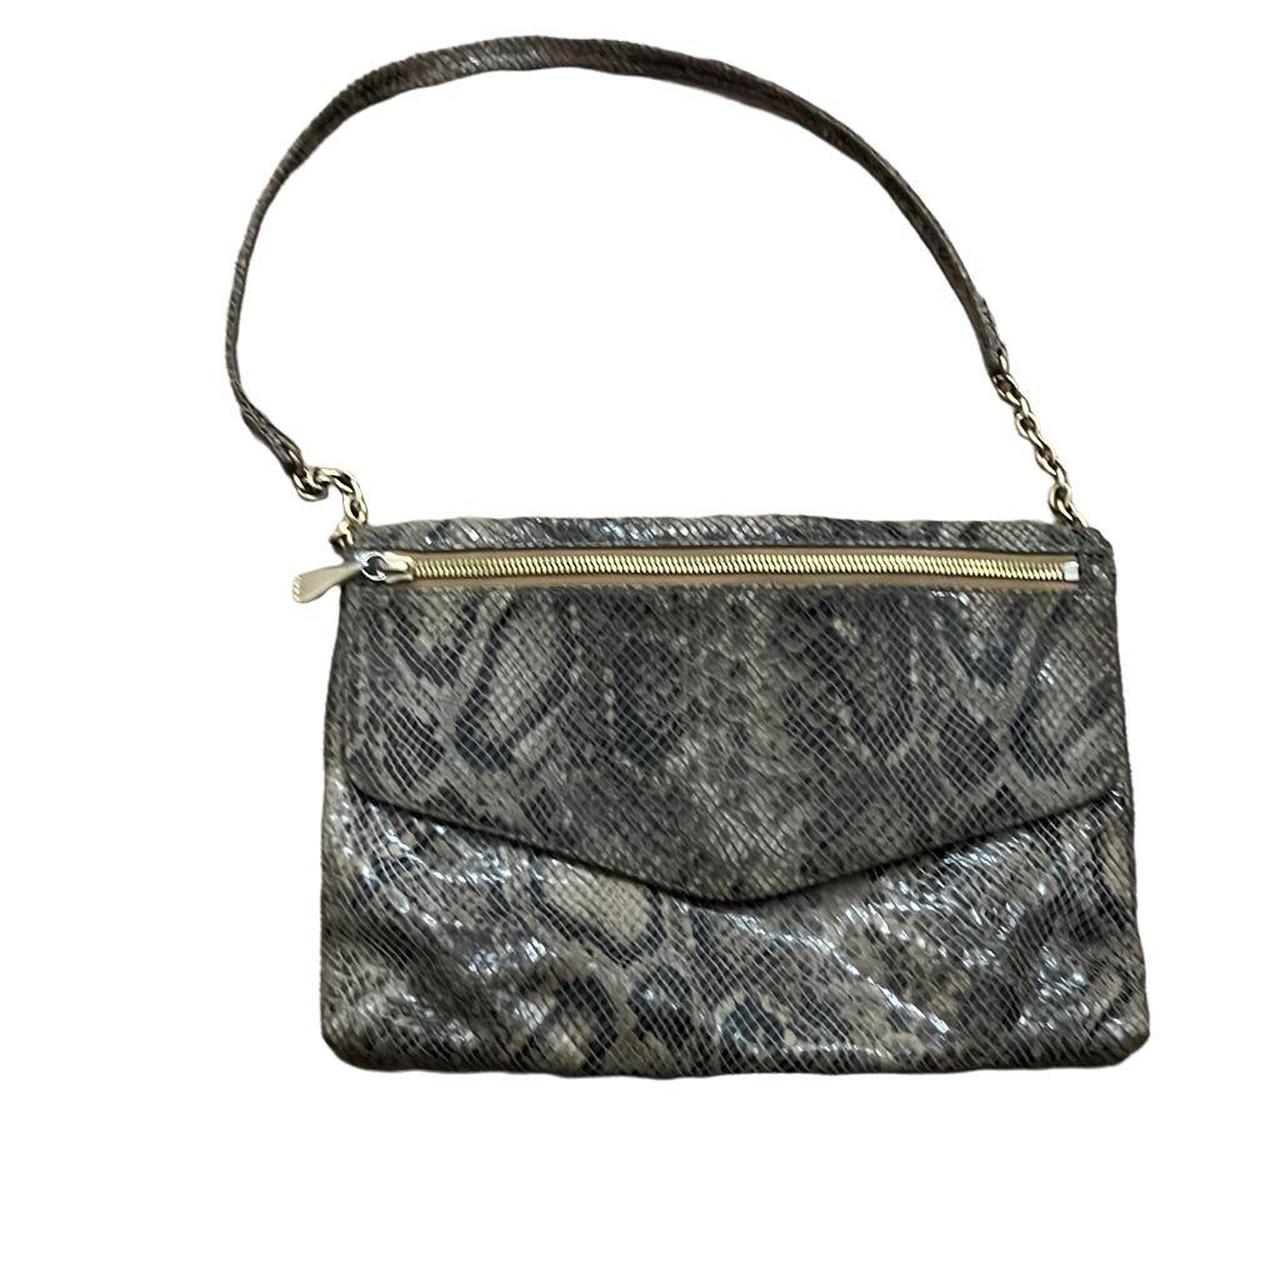 Black leather Hobo International purse handbag pocketbook | eBay